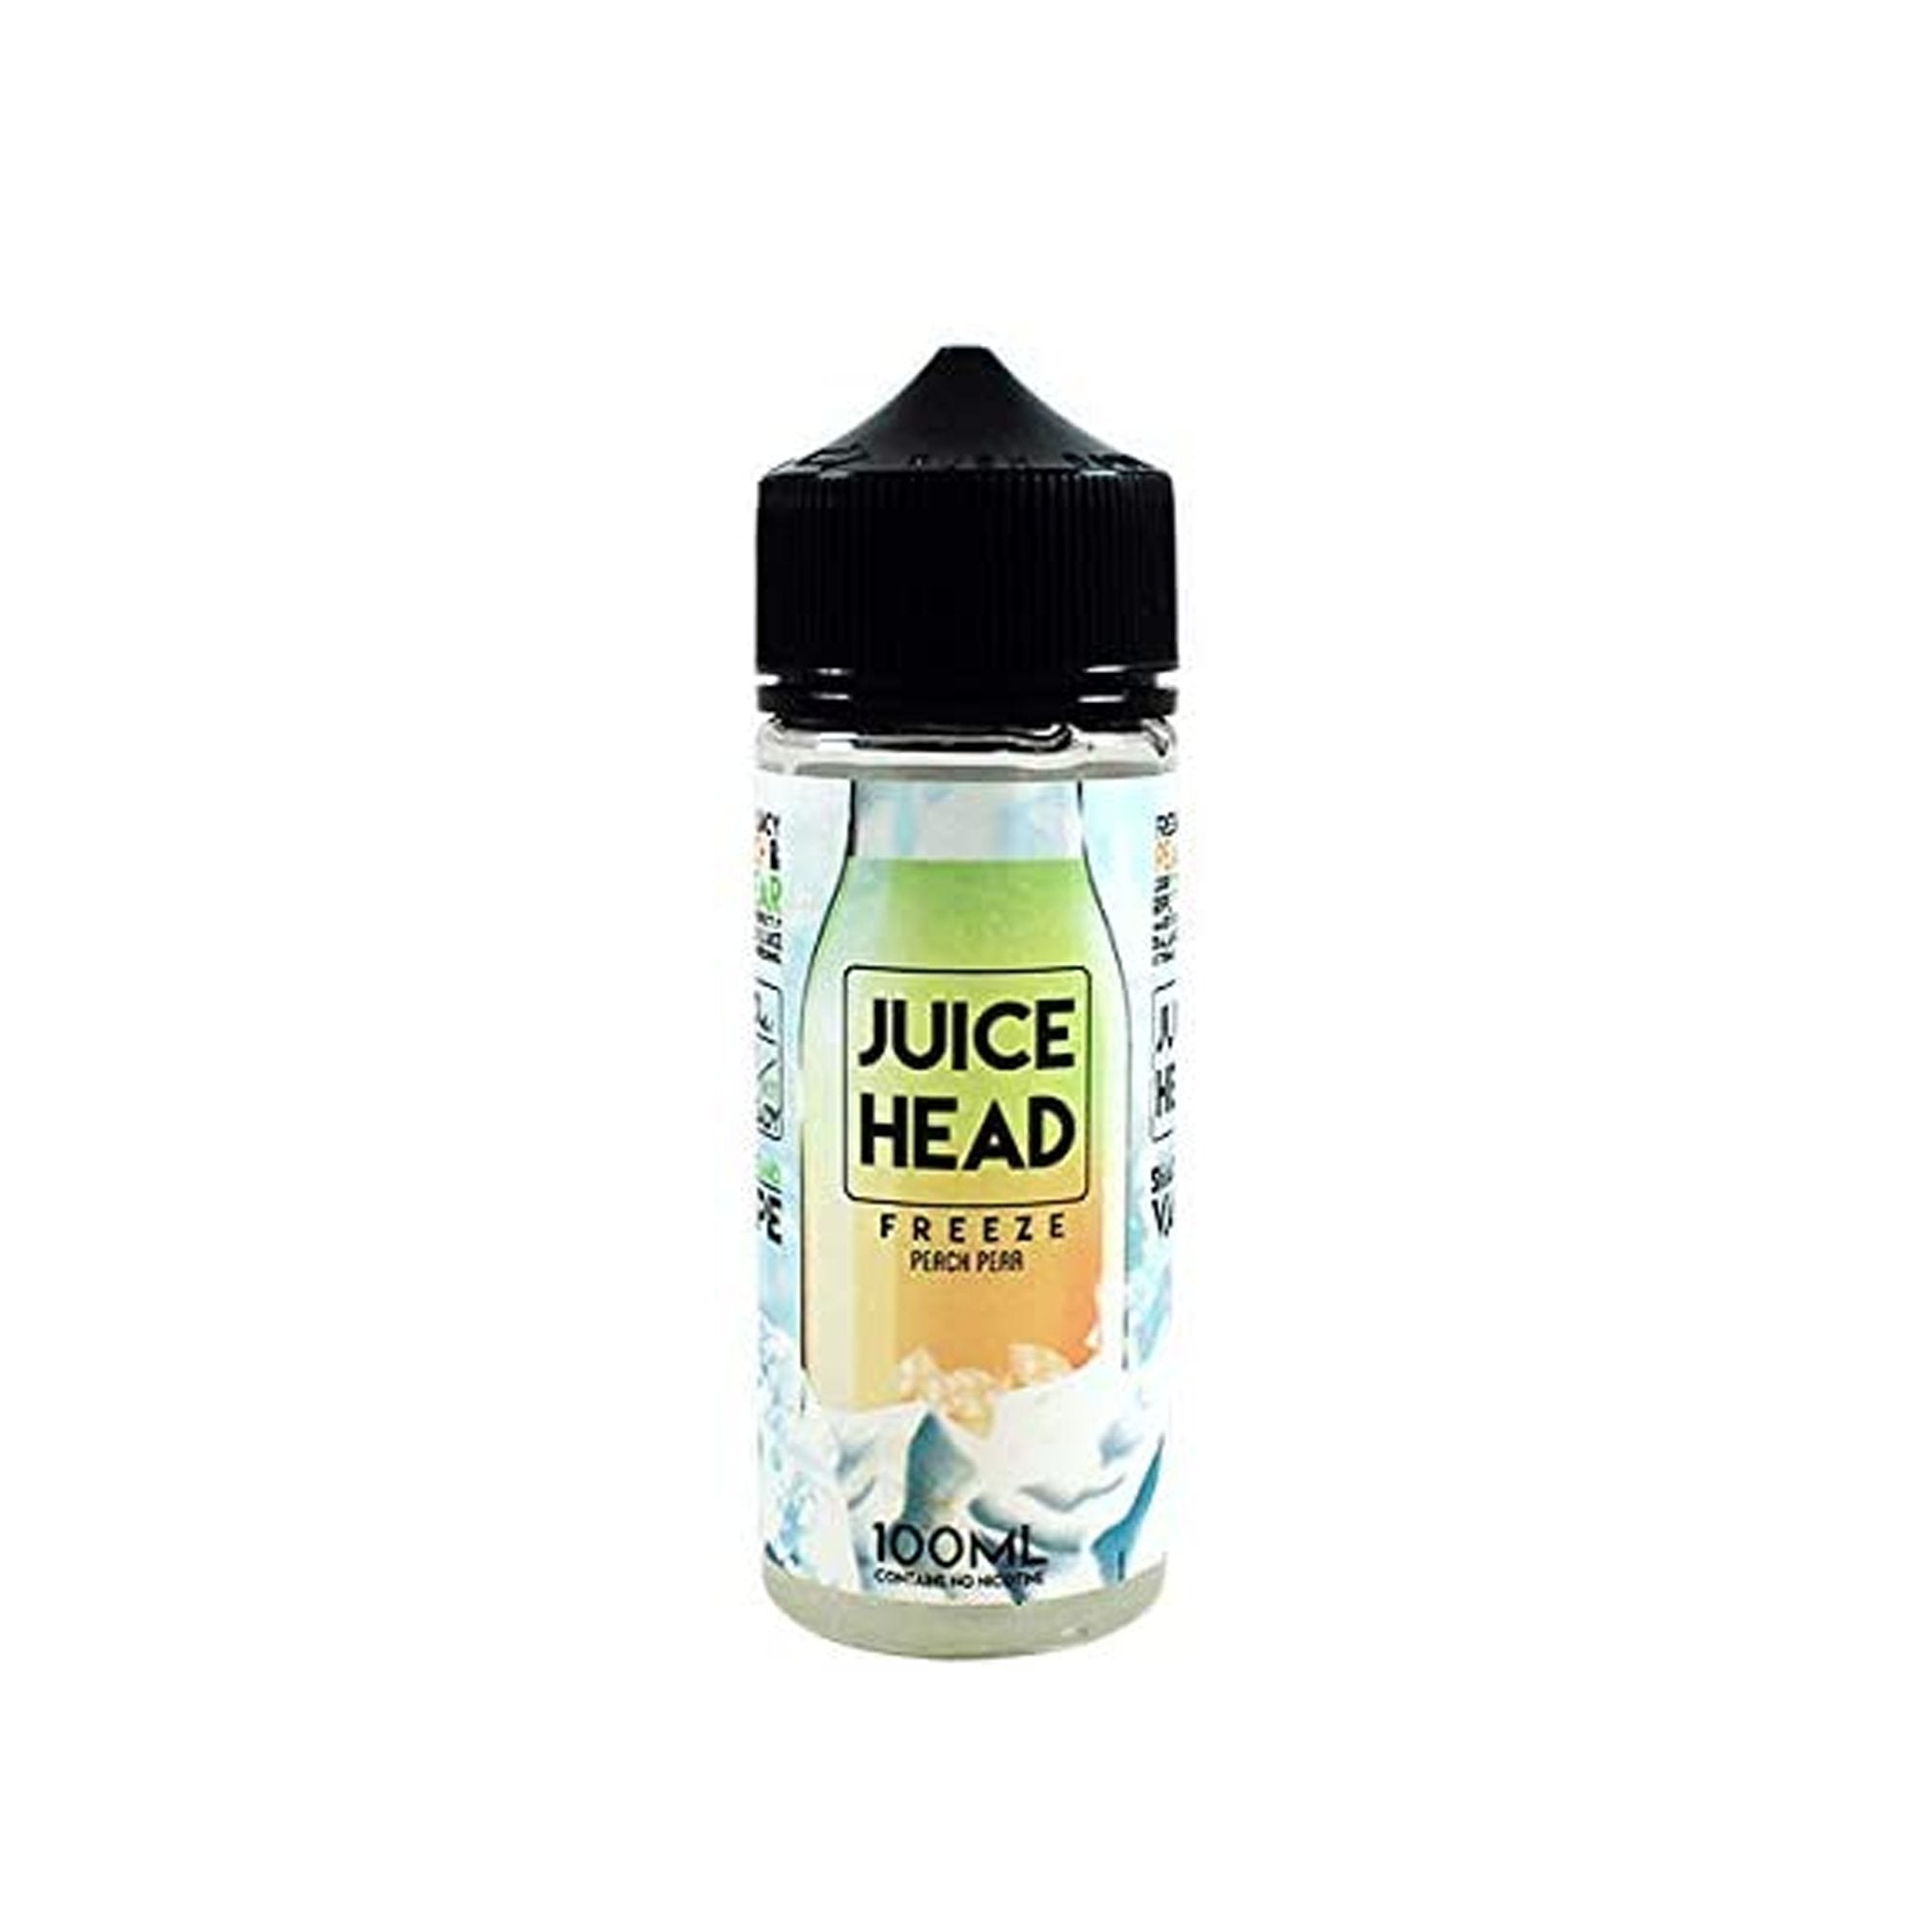 Juice Head Shortfill 120ml E-Liquid - Wolfvapes.co.uk-Freeze Pear Peach